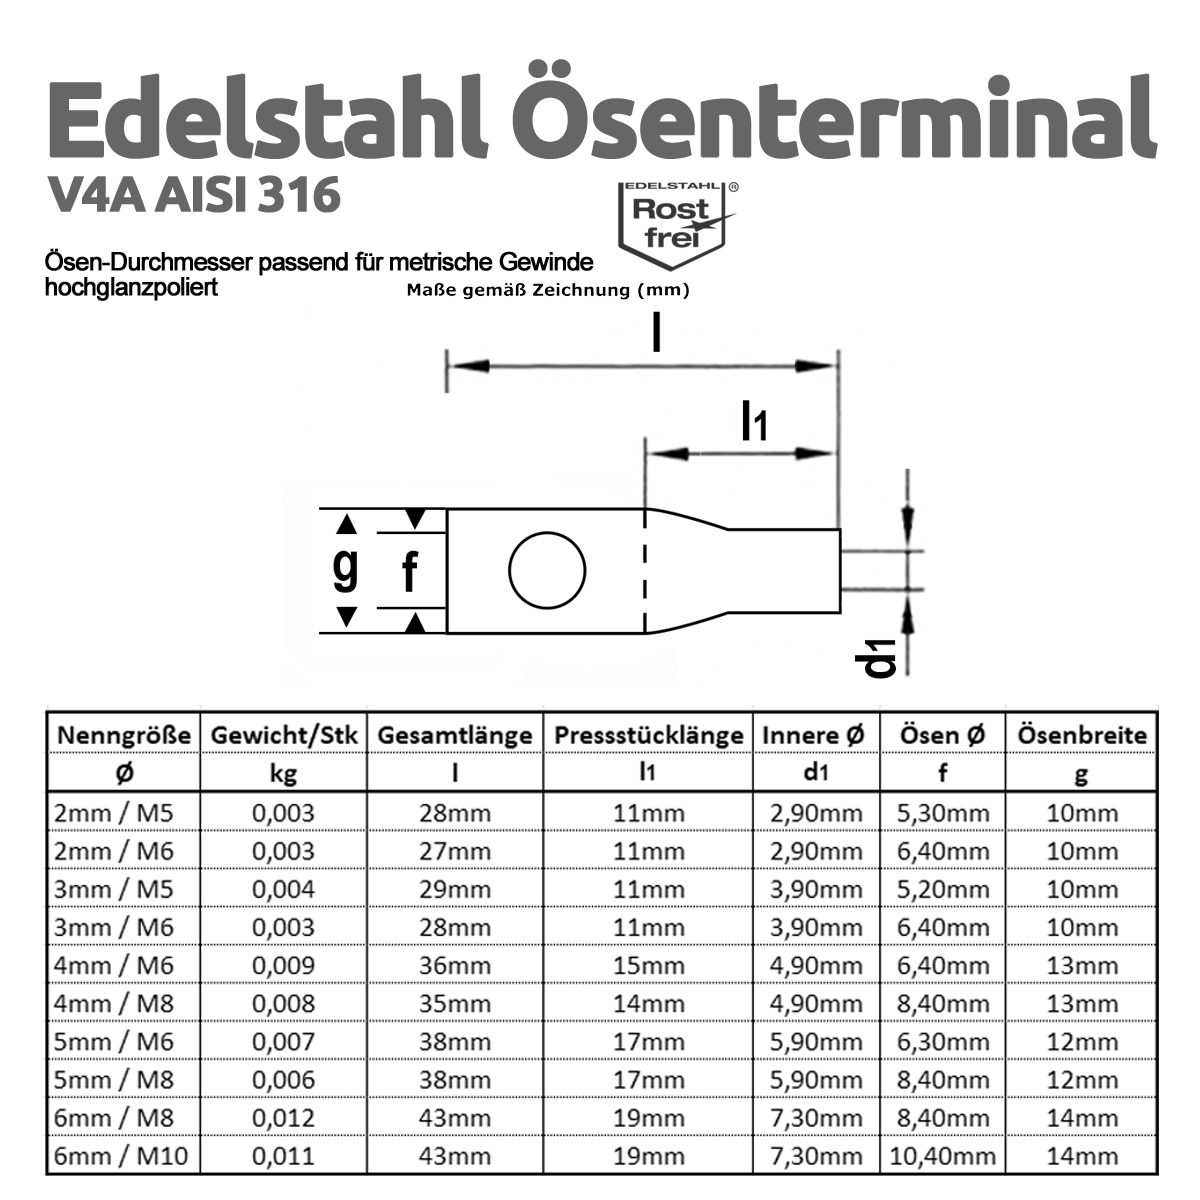 Edelstahl_-senterminal_Grafik